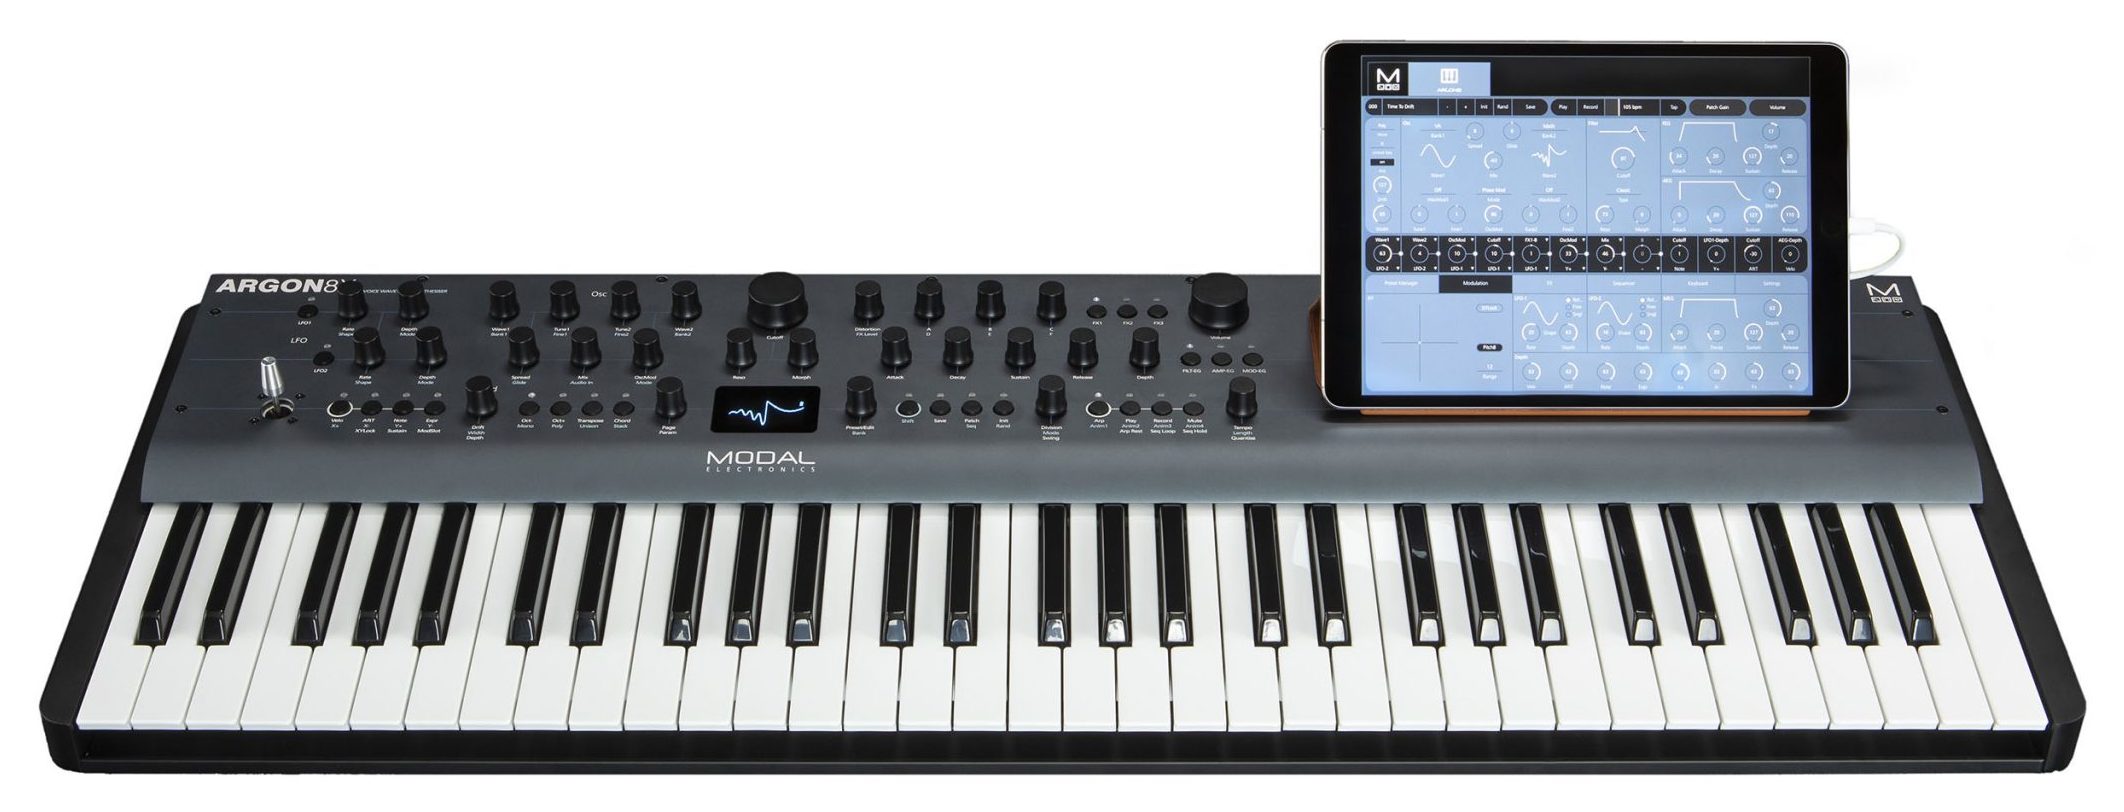 Modal Electronics Argon 8X con la aplicación de control ModalApp en ejecución sobre Apple iPad